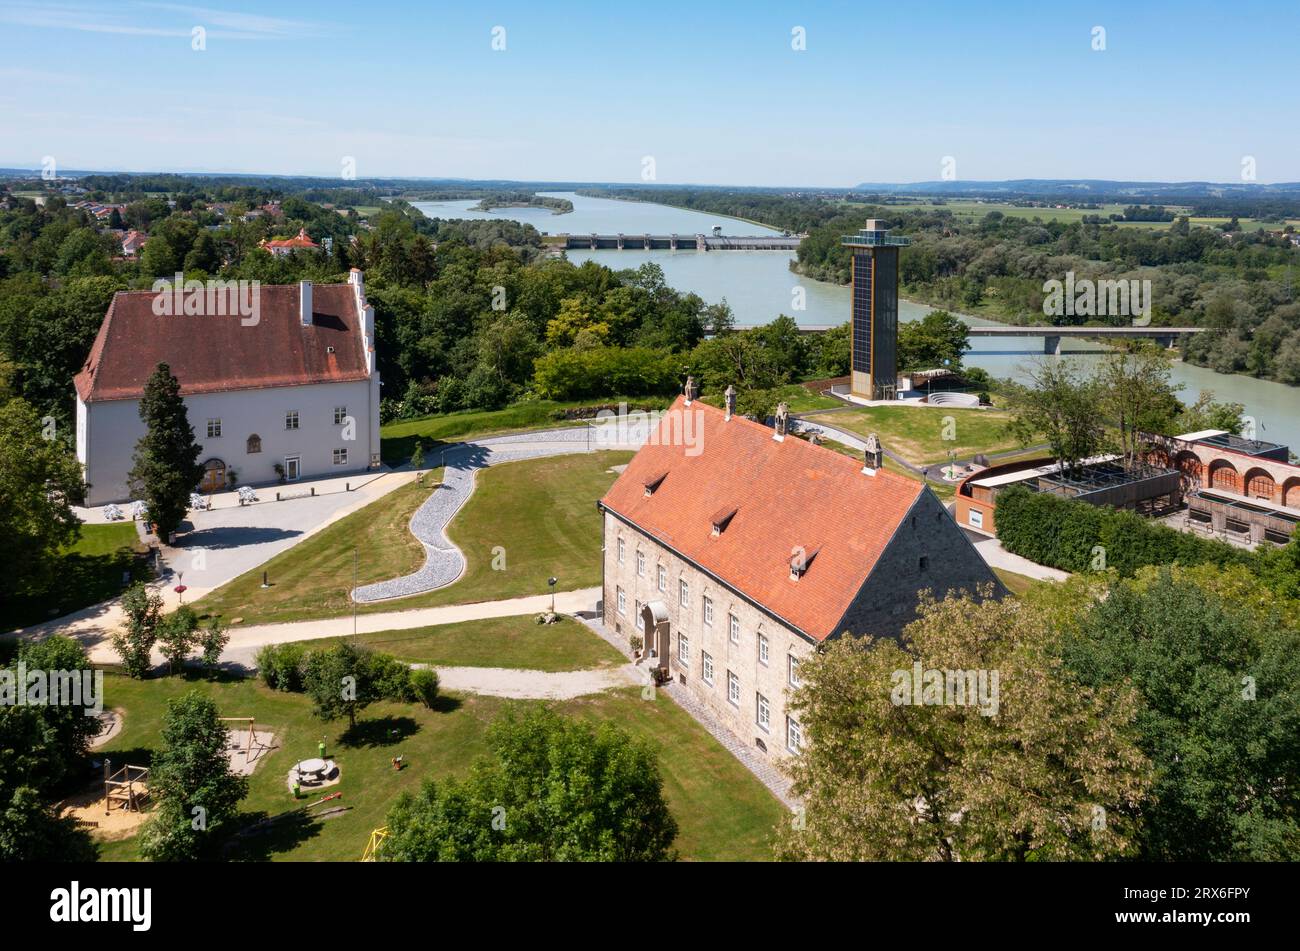 Austria, Upper Austria, Obernberg am Inn, Drone view of Obernberg Castle with Inn river in background Stock Photo